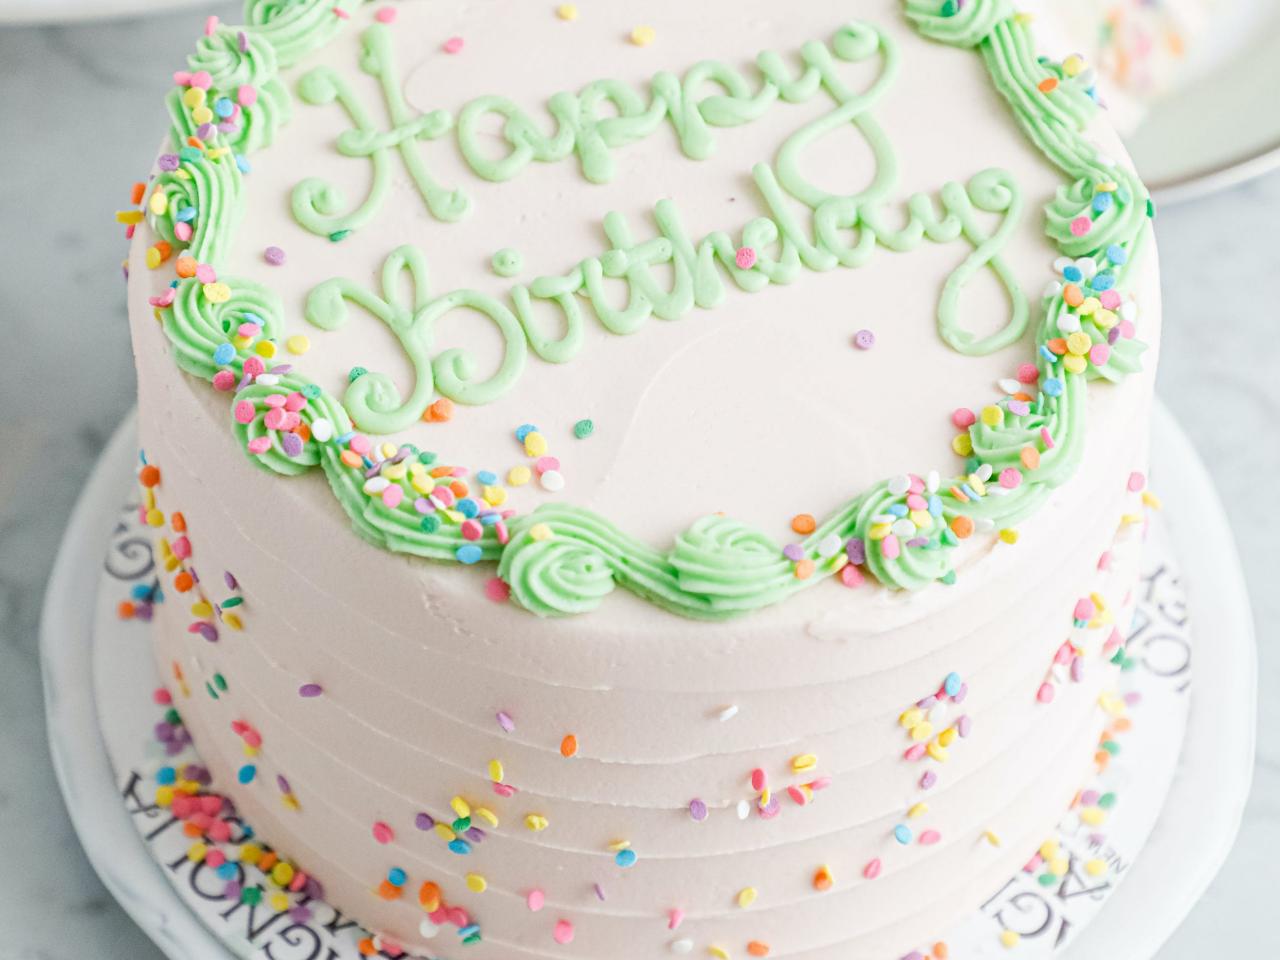 H-E-B Bakery Birthday Cake - Shop Standard Cakes at H-E-B